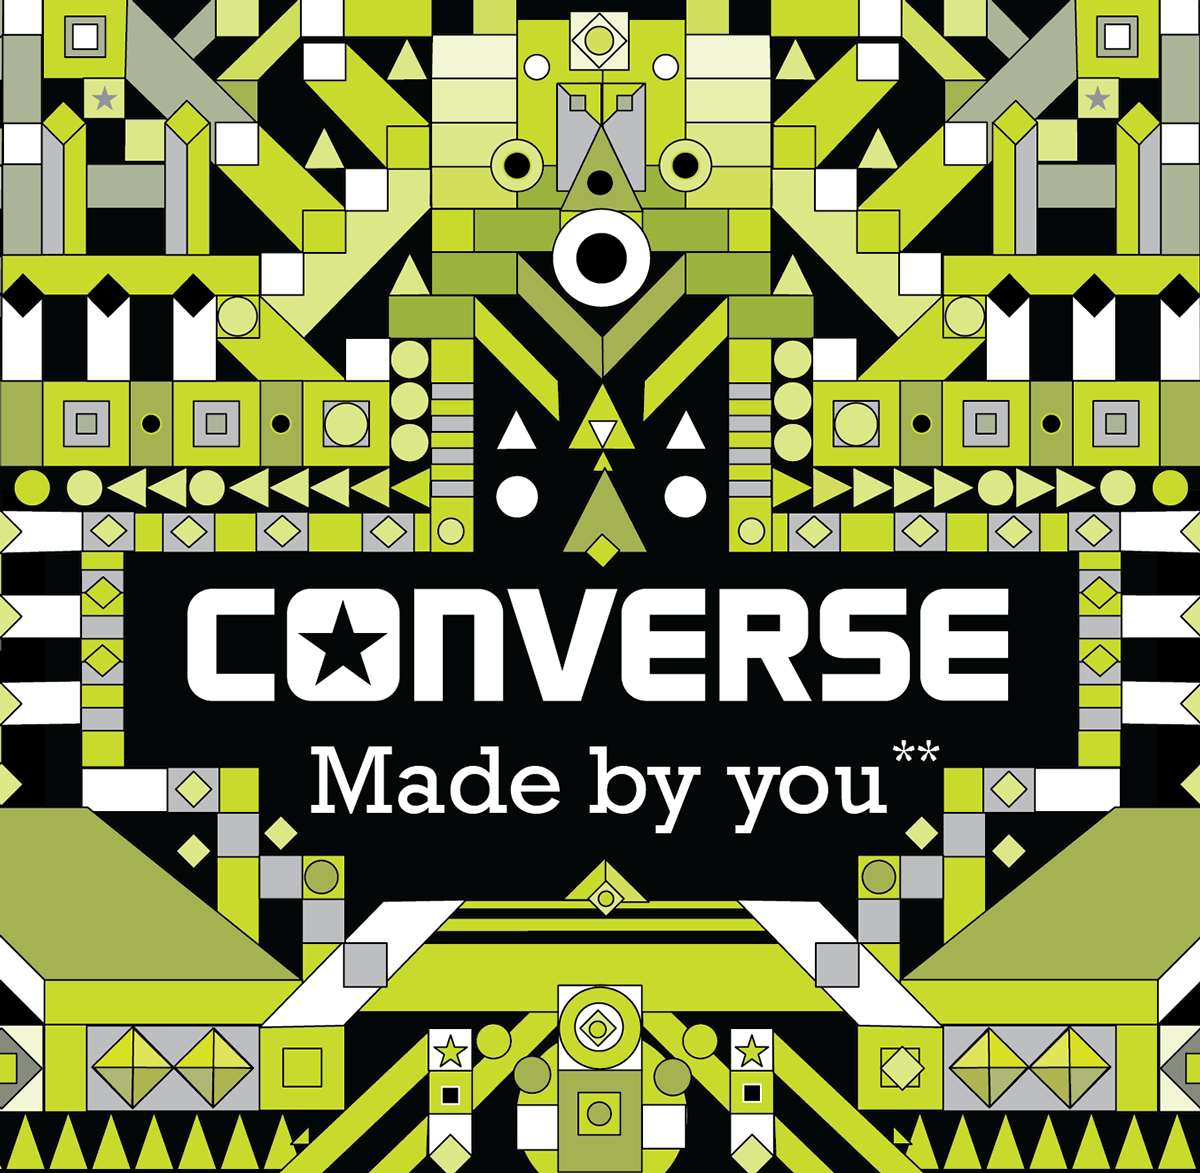 chuck2 converse poster yellow black shoes pub symétrique geometric abstrac allstar2 Chuck Taylor